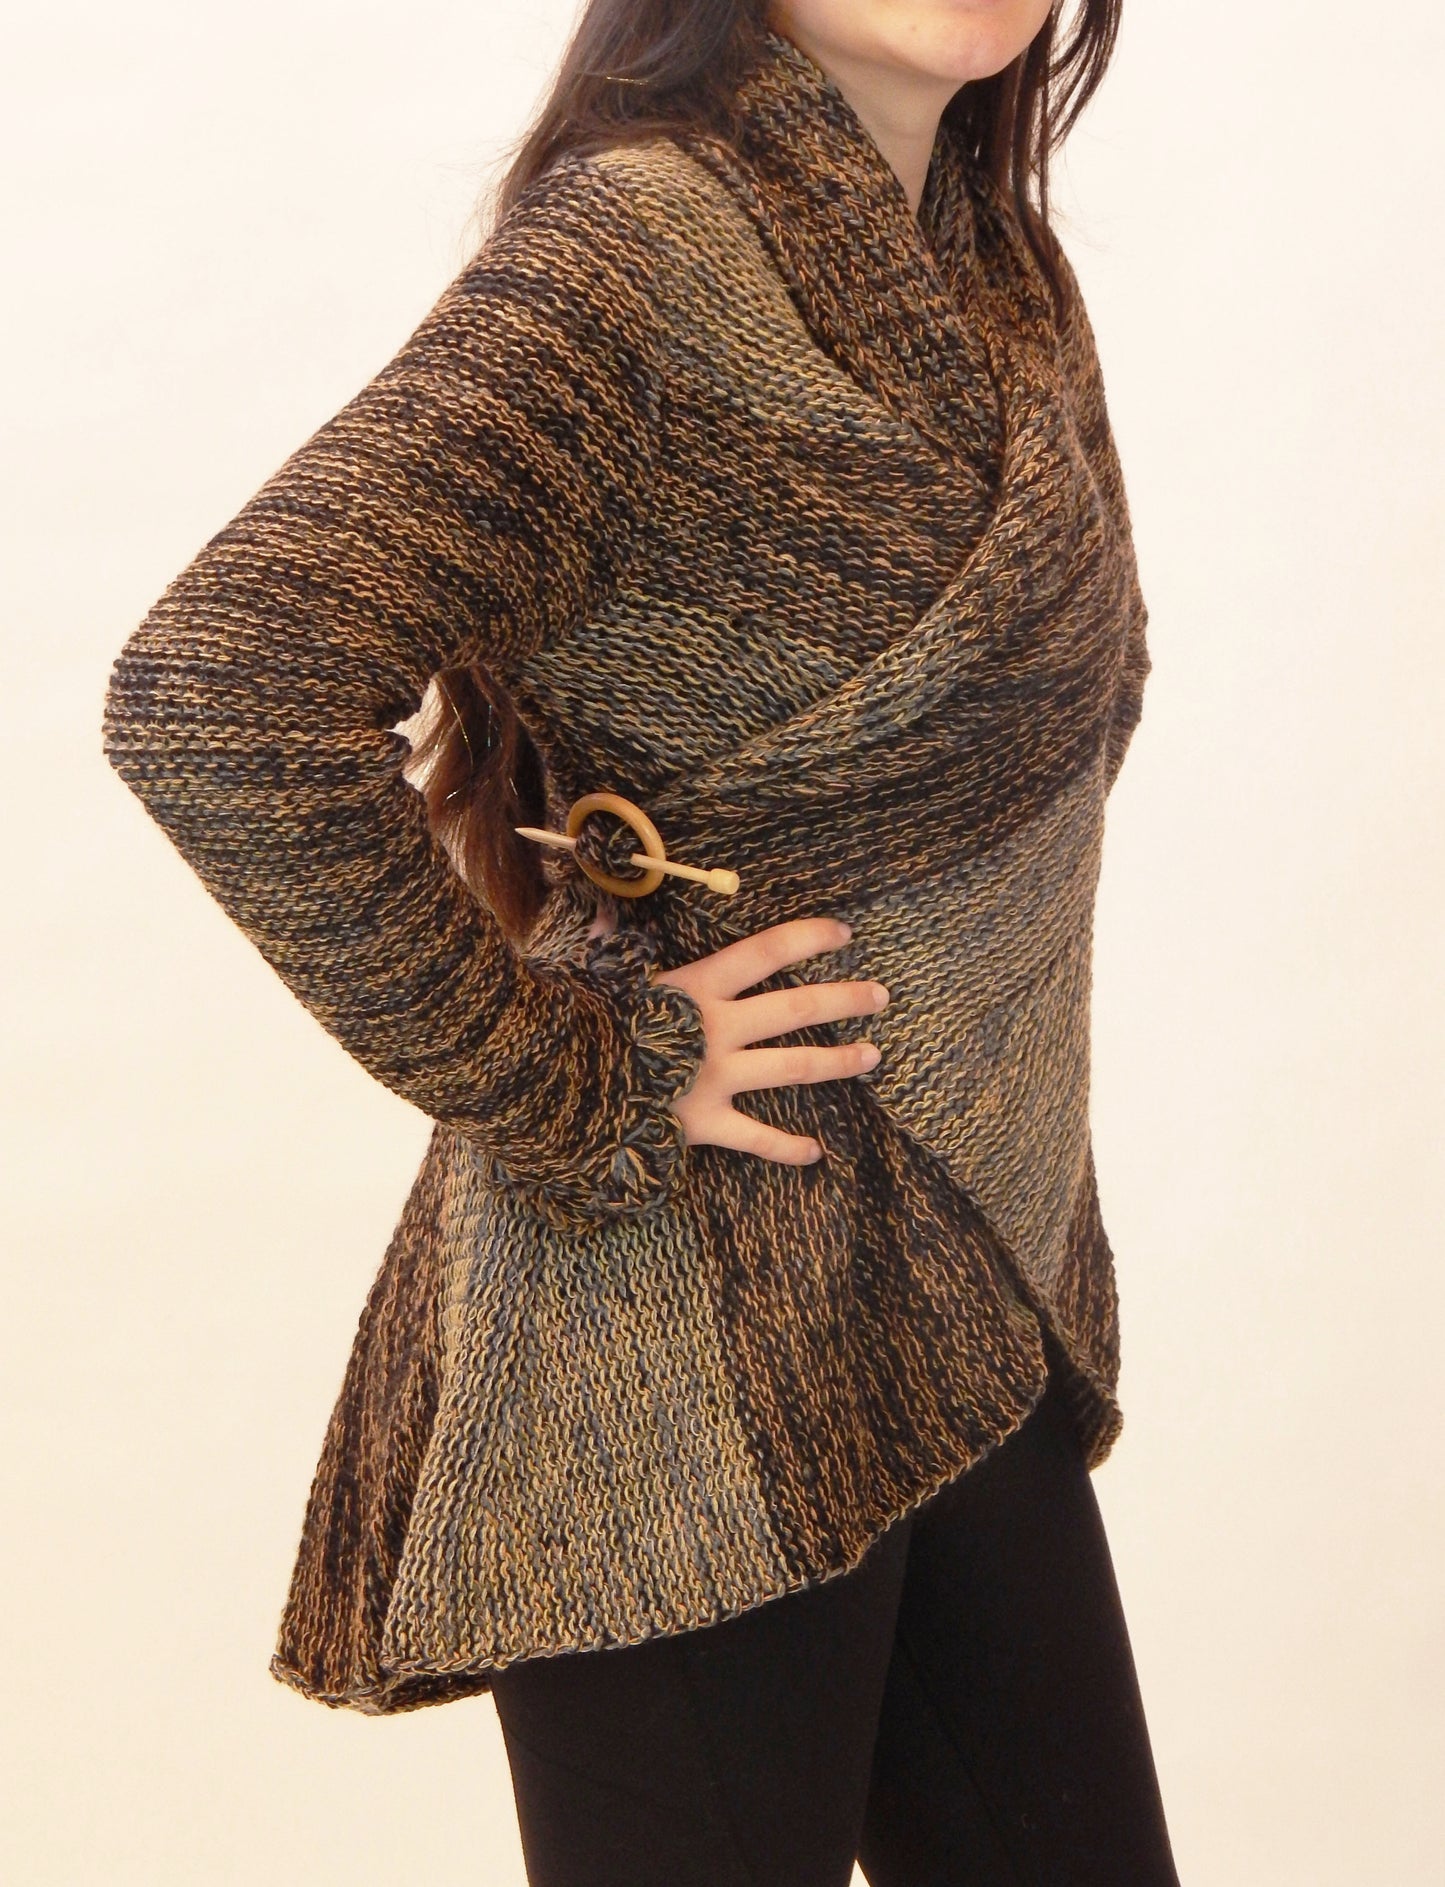 Fine Alpaca Wool Tailored Peacoat Cardigan Petticoat Jacket Knitted Coat Open Versatile Stylish Elegant Fitted Wrap Crochet Sleeve Browns